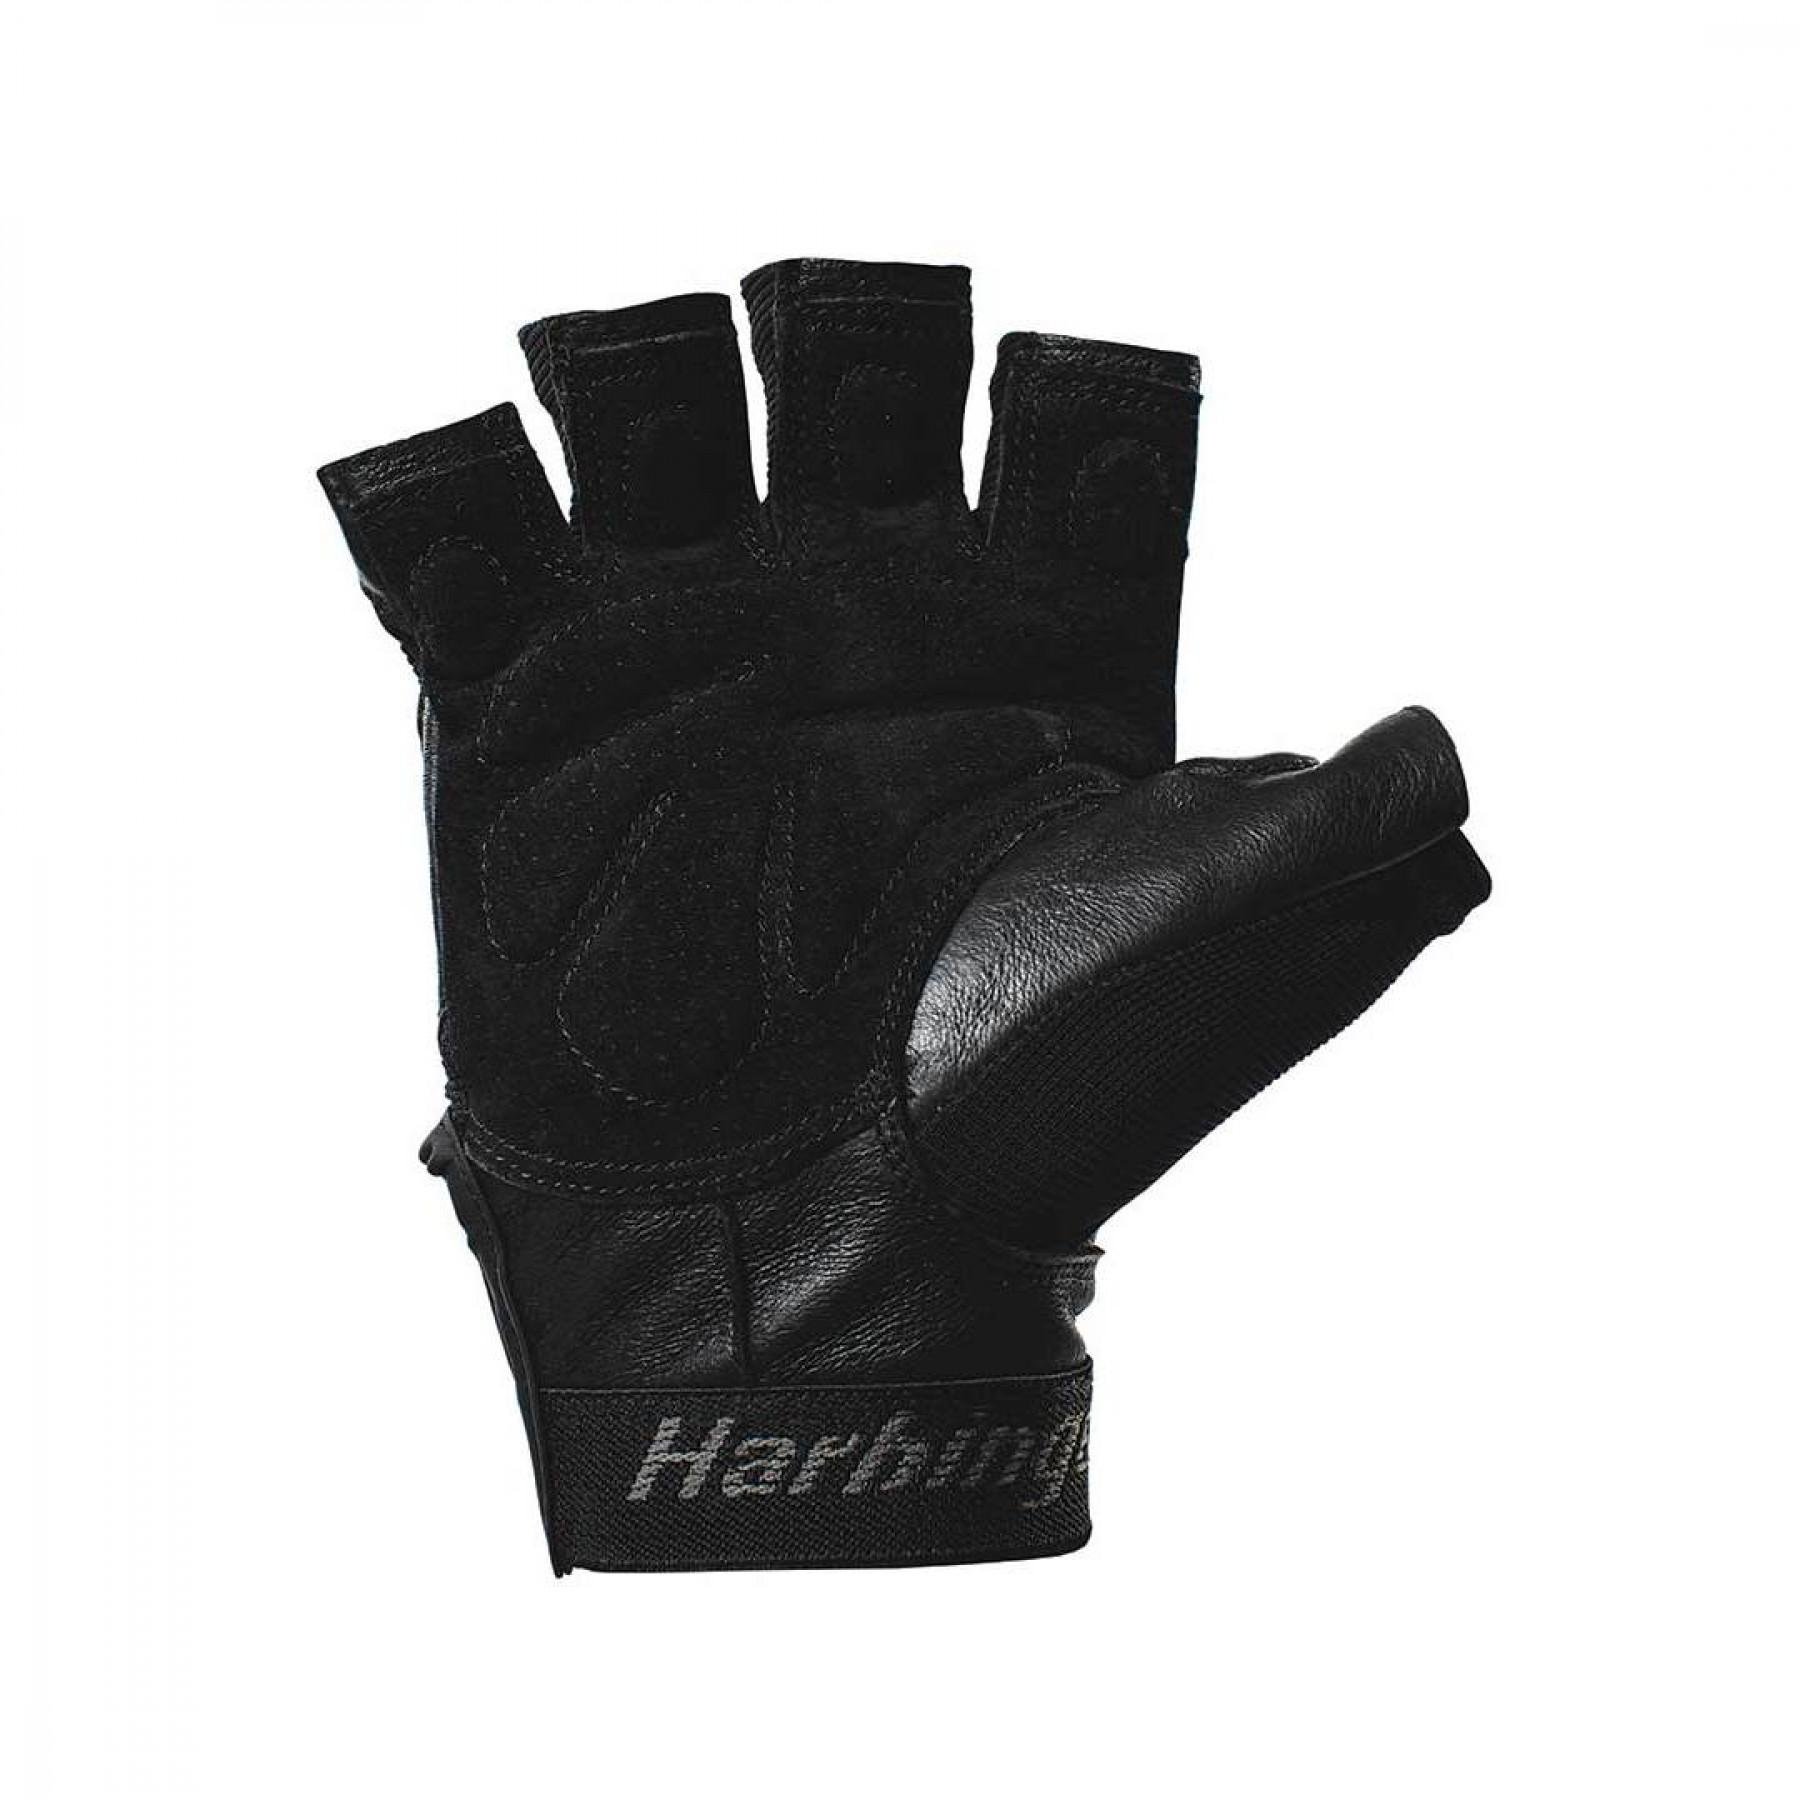 Glove Harbinger Training Grip